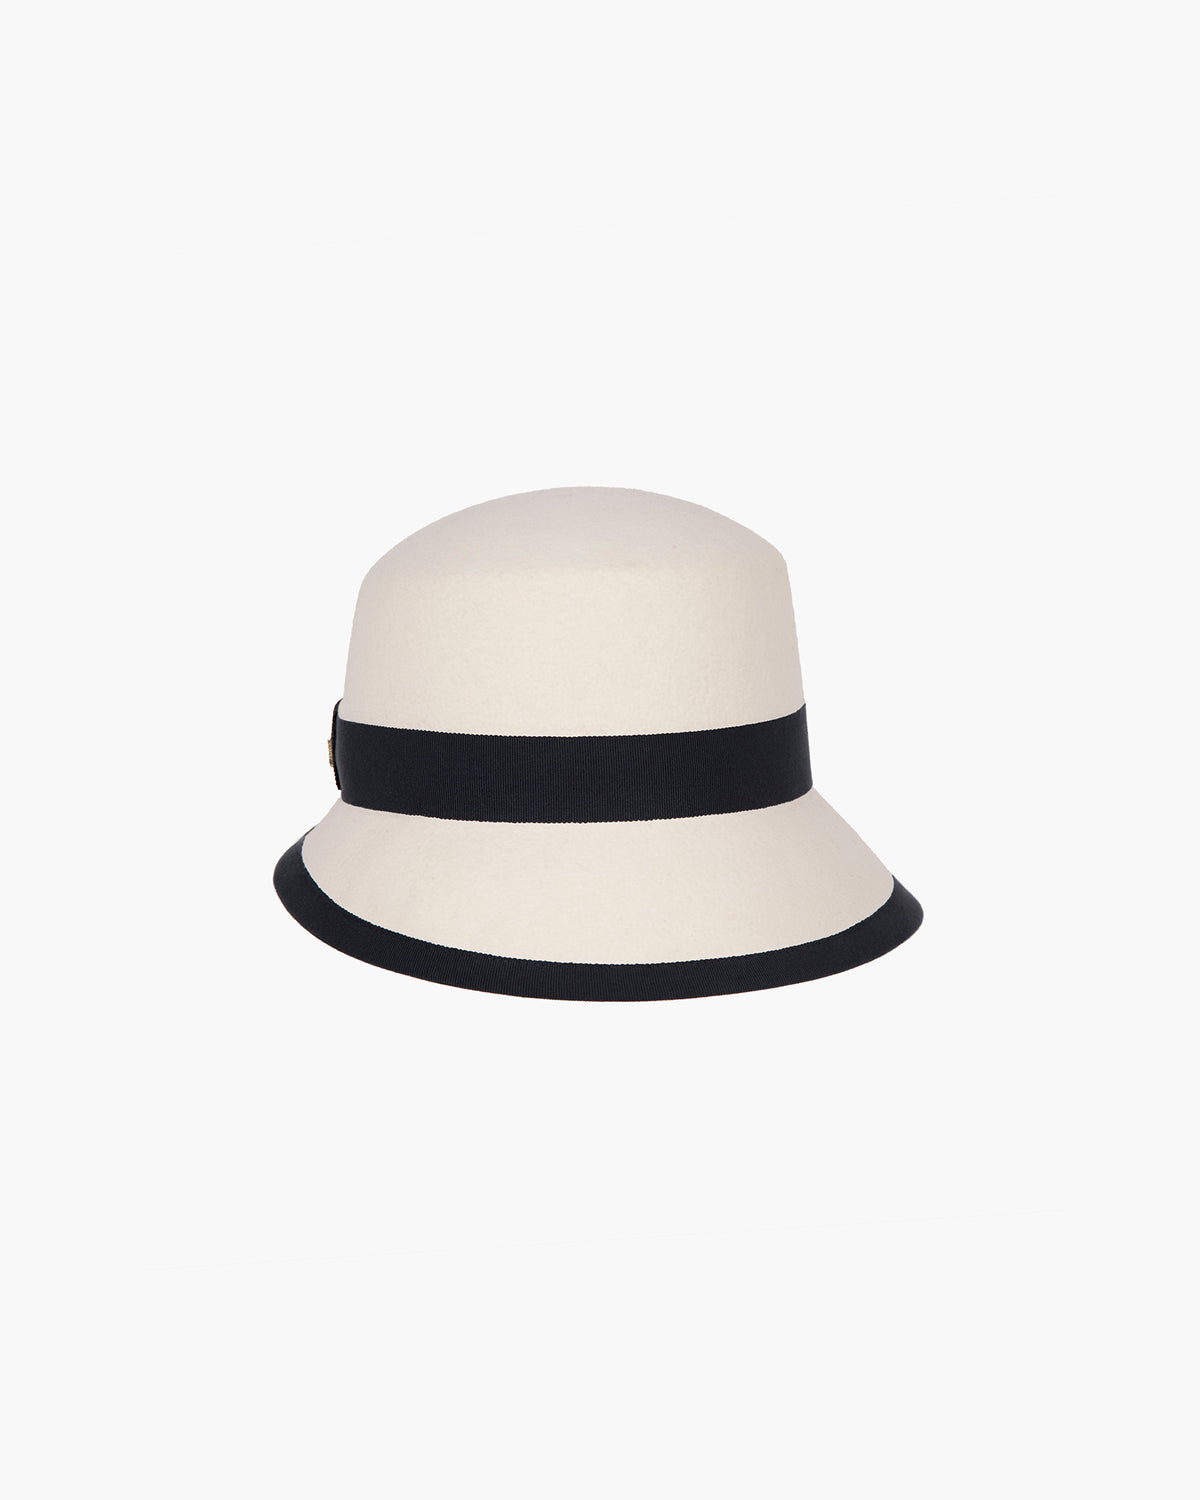 Black Wool Felt Soft Extra Wide Large Brim Floppy Fedora Hat for Women 6  1/4